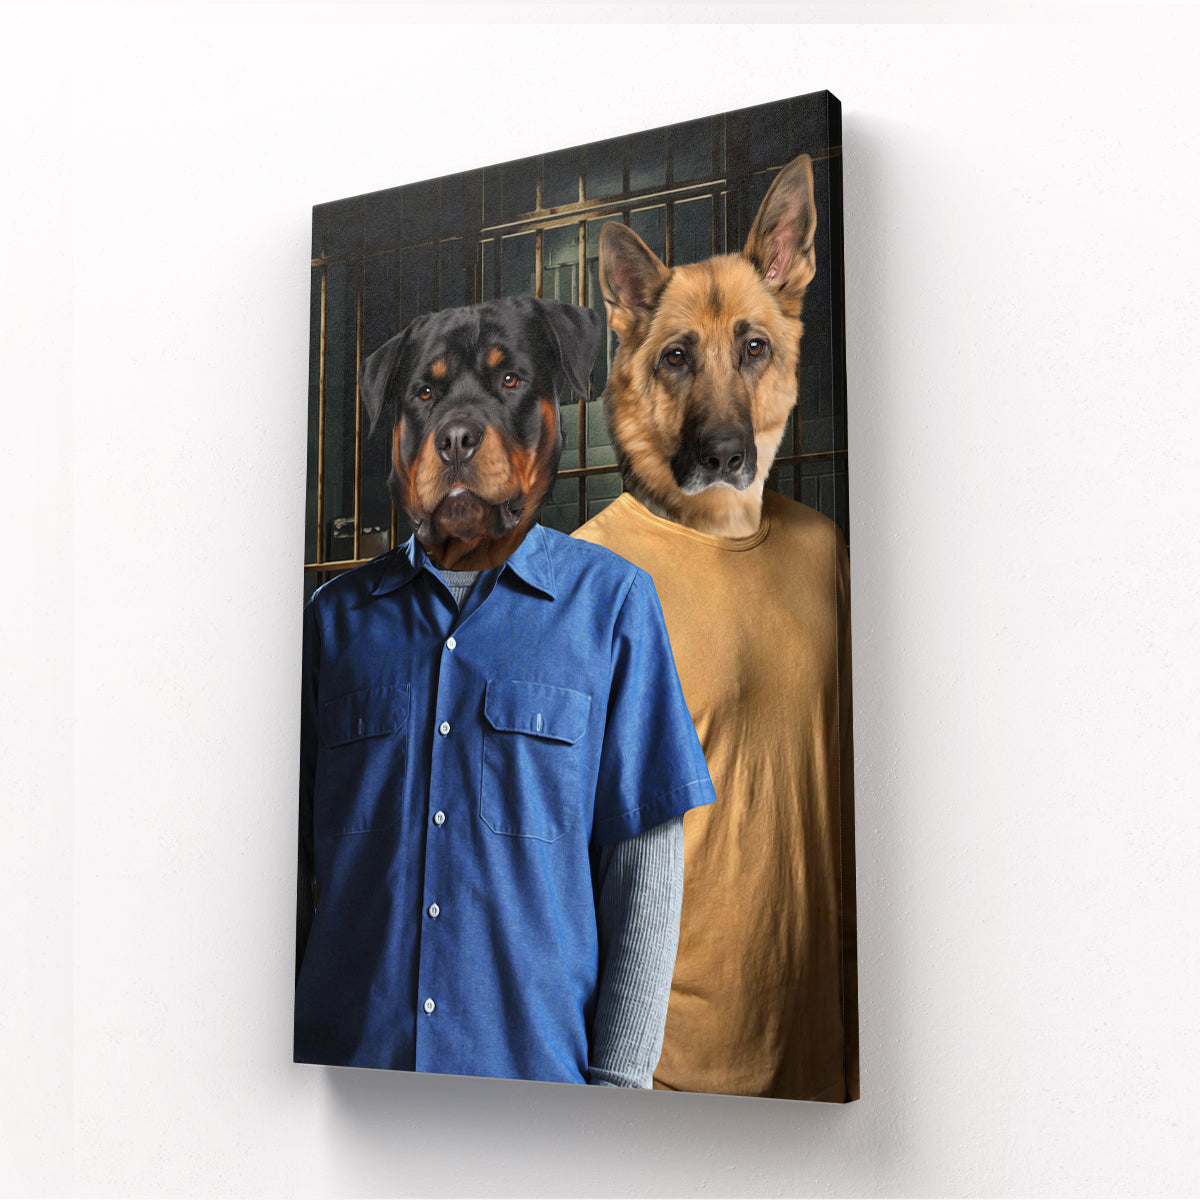 Paw & Glory, paw and glory, original pet portraits, pet portraits usa, custom pet portraits south africa, dog portrait images, small dog portrait, dog portraits singapore, pet portrait